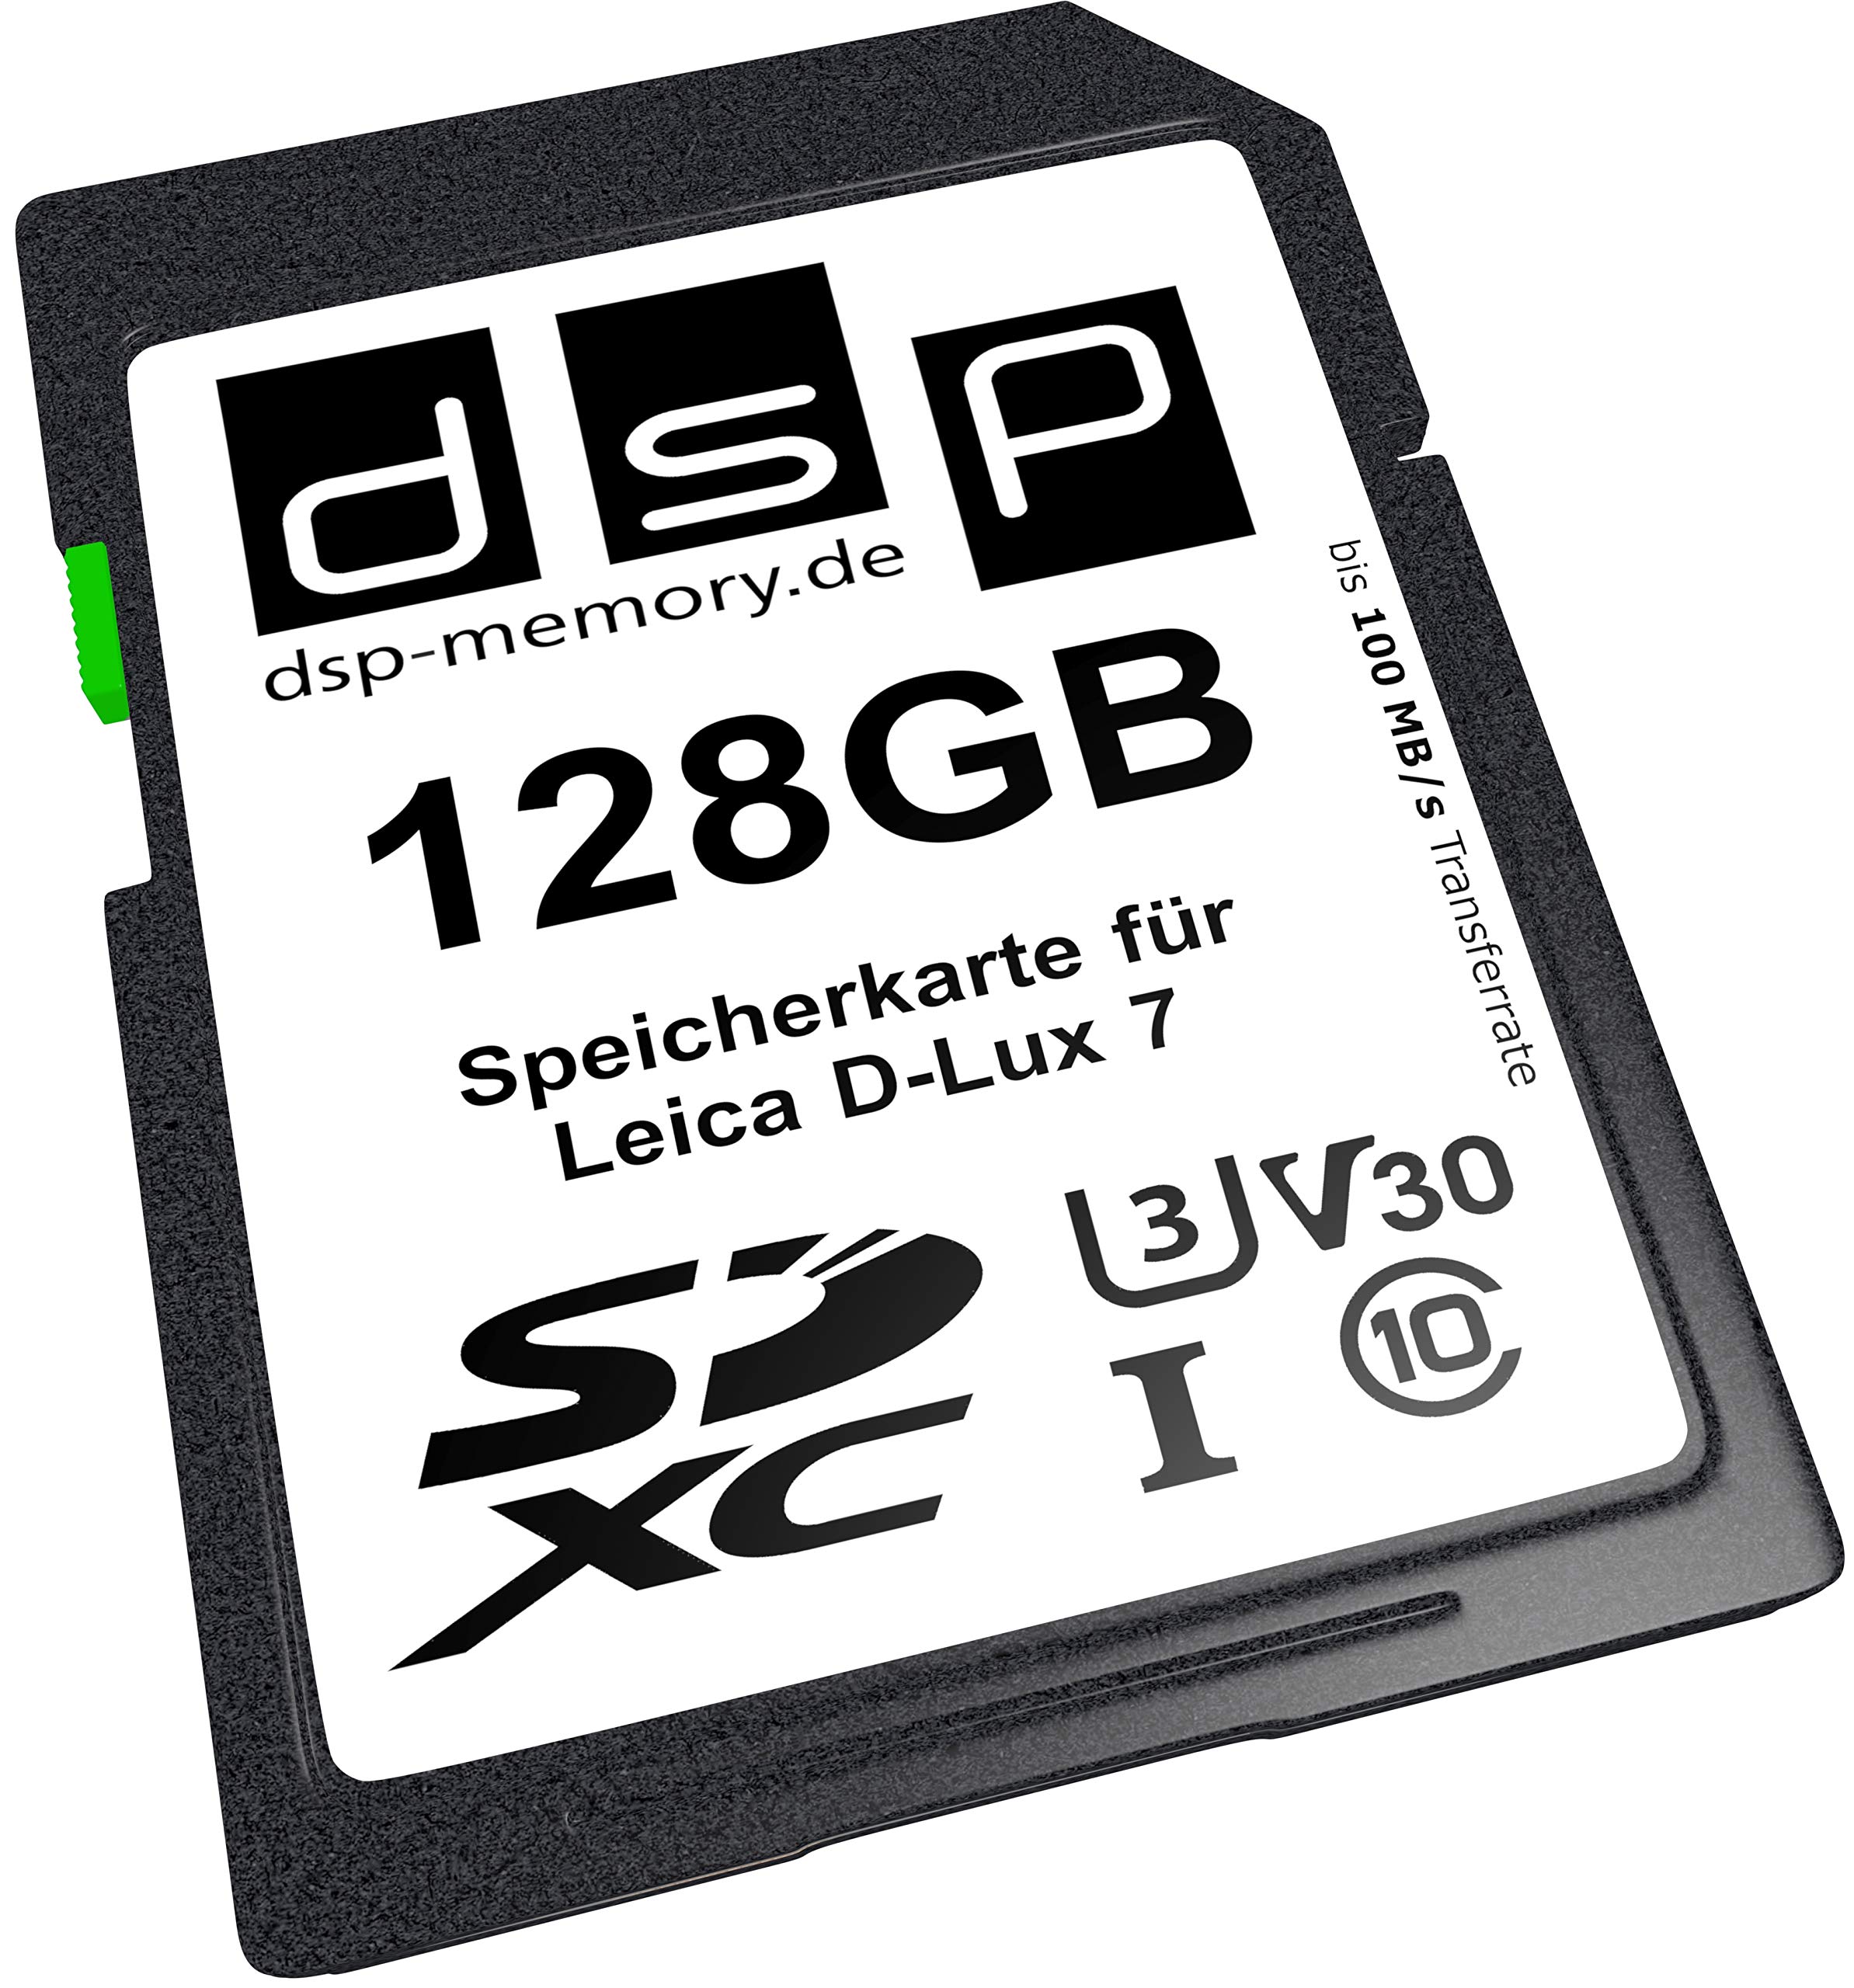 DSP Memory 128GB Professional V30 Speicherkarte für Leica D-Lux 7 Digitalkamera